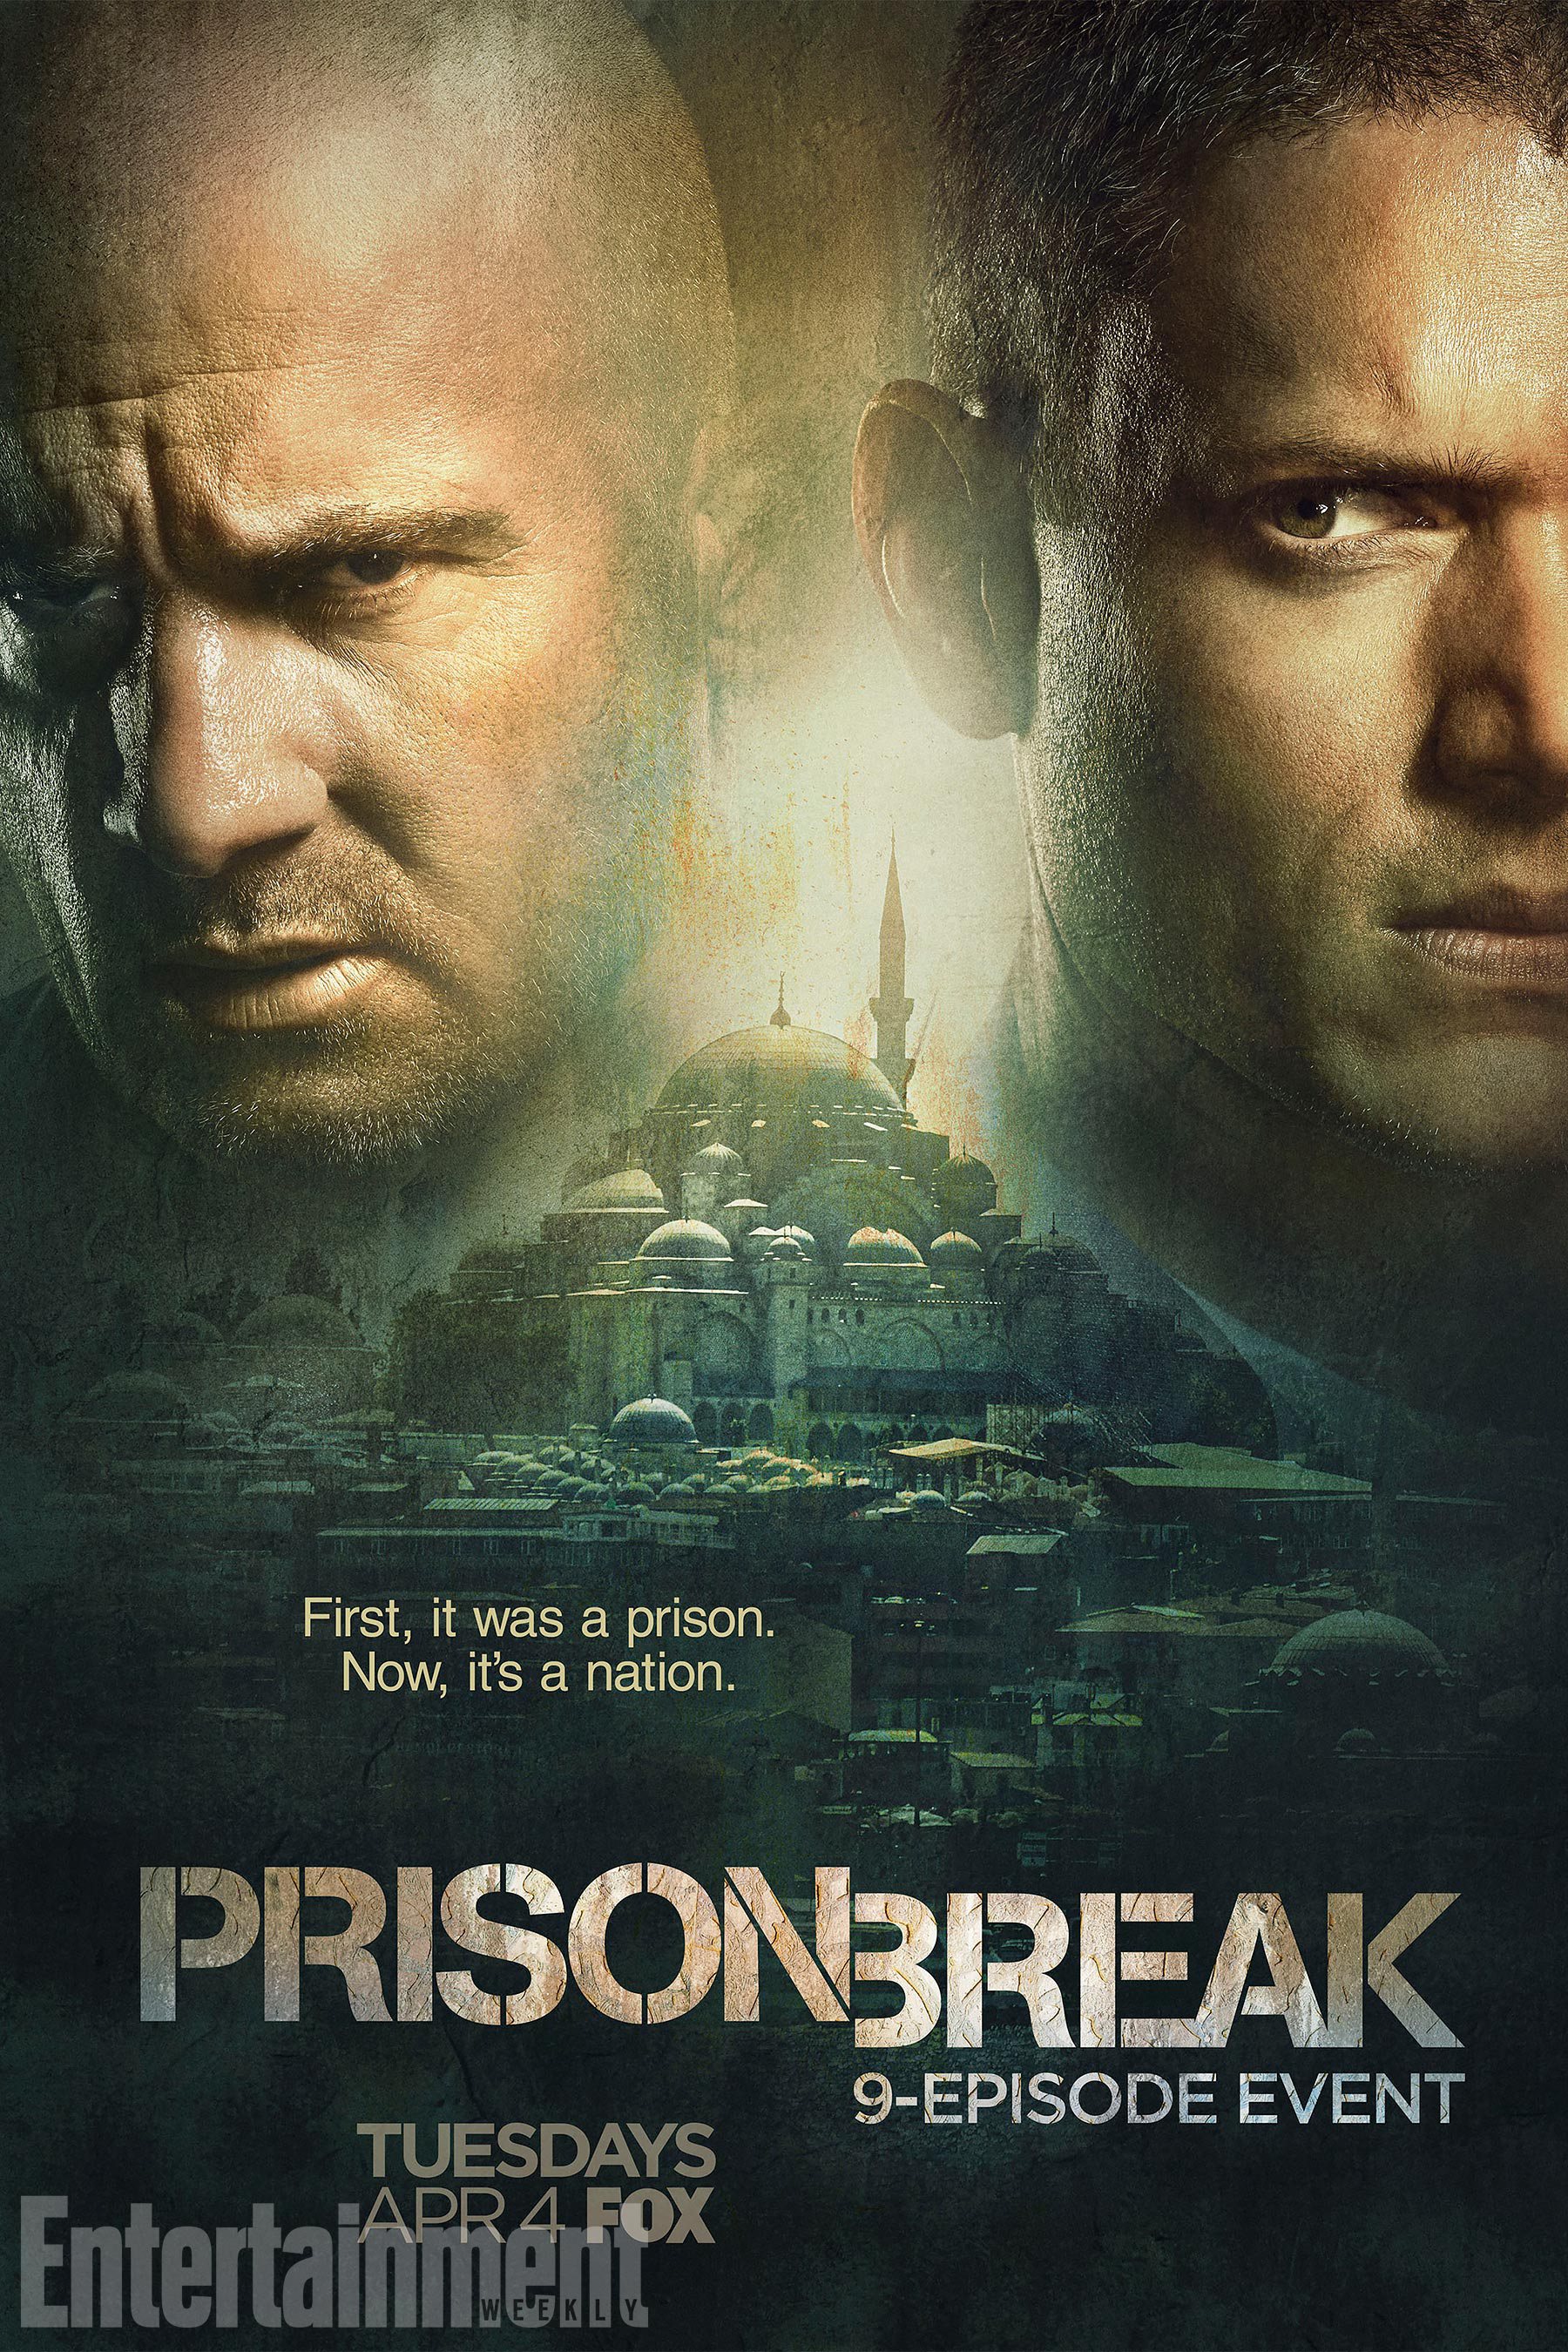 Prison Break: Sequel